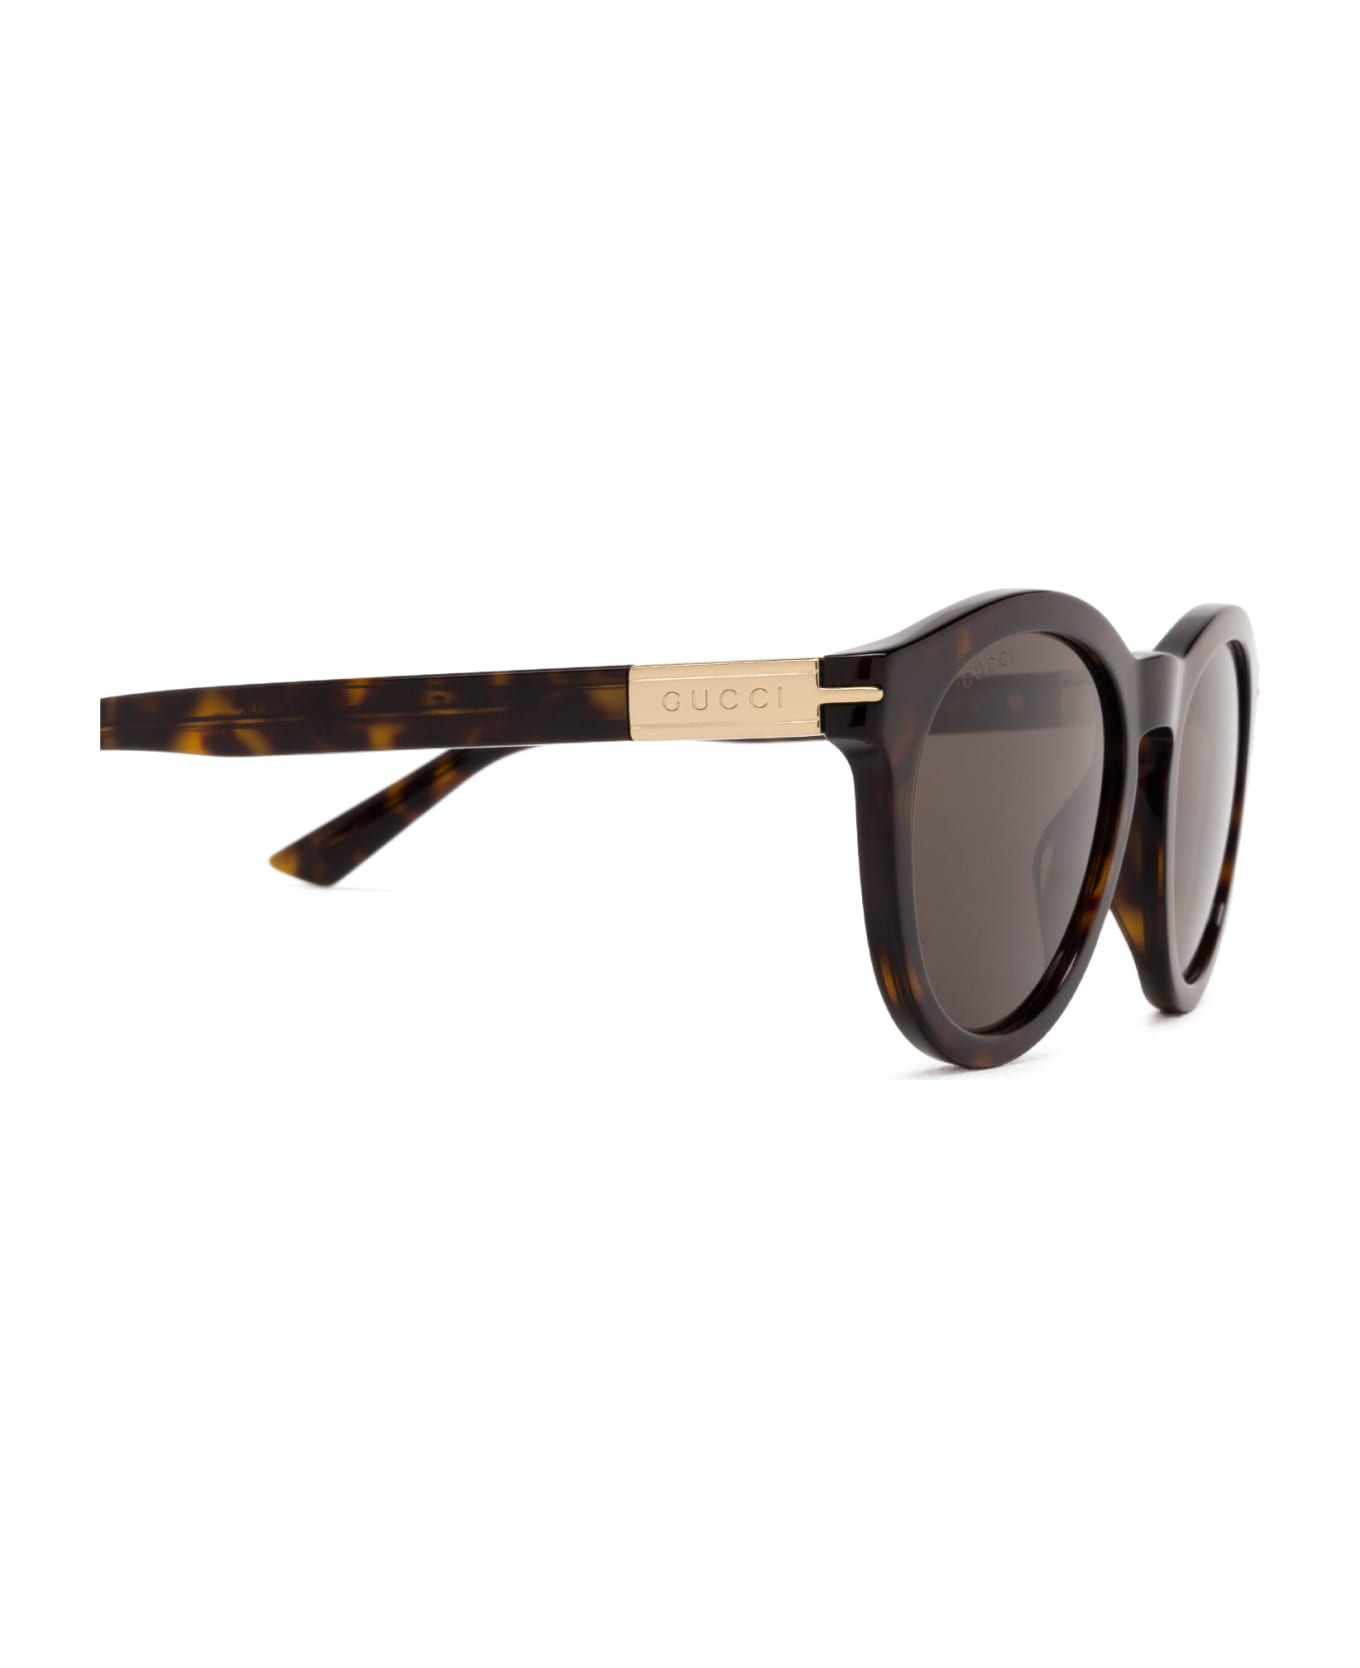 Gucci Eyewear Gg1501s Havana Sunglasses - Havana